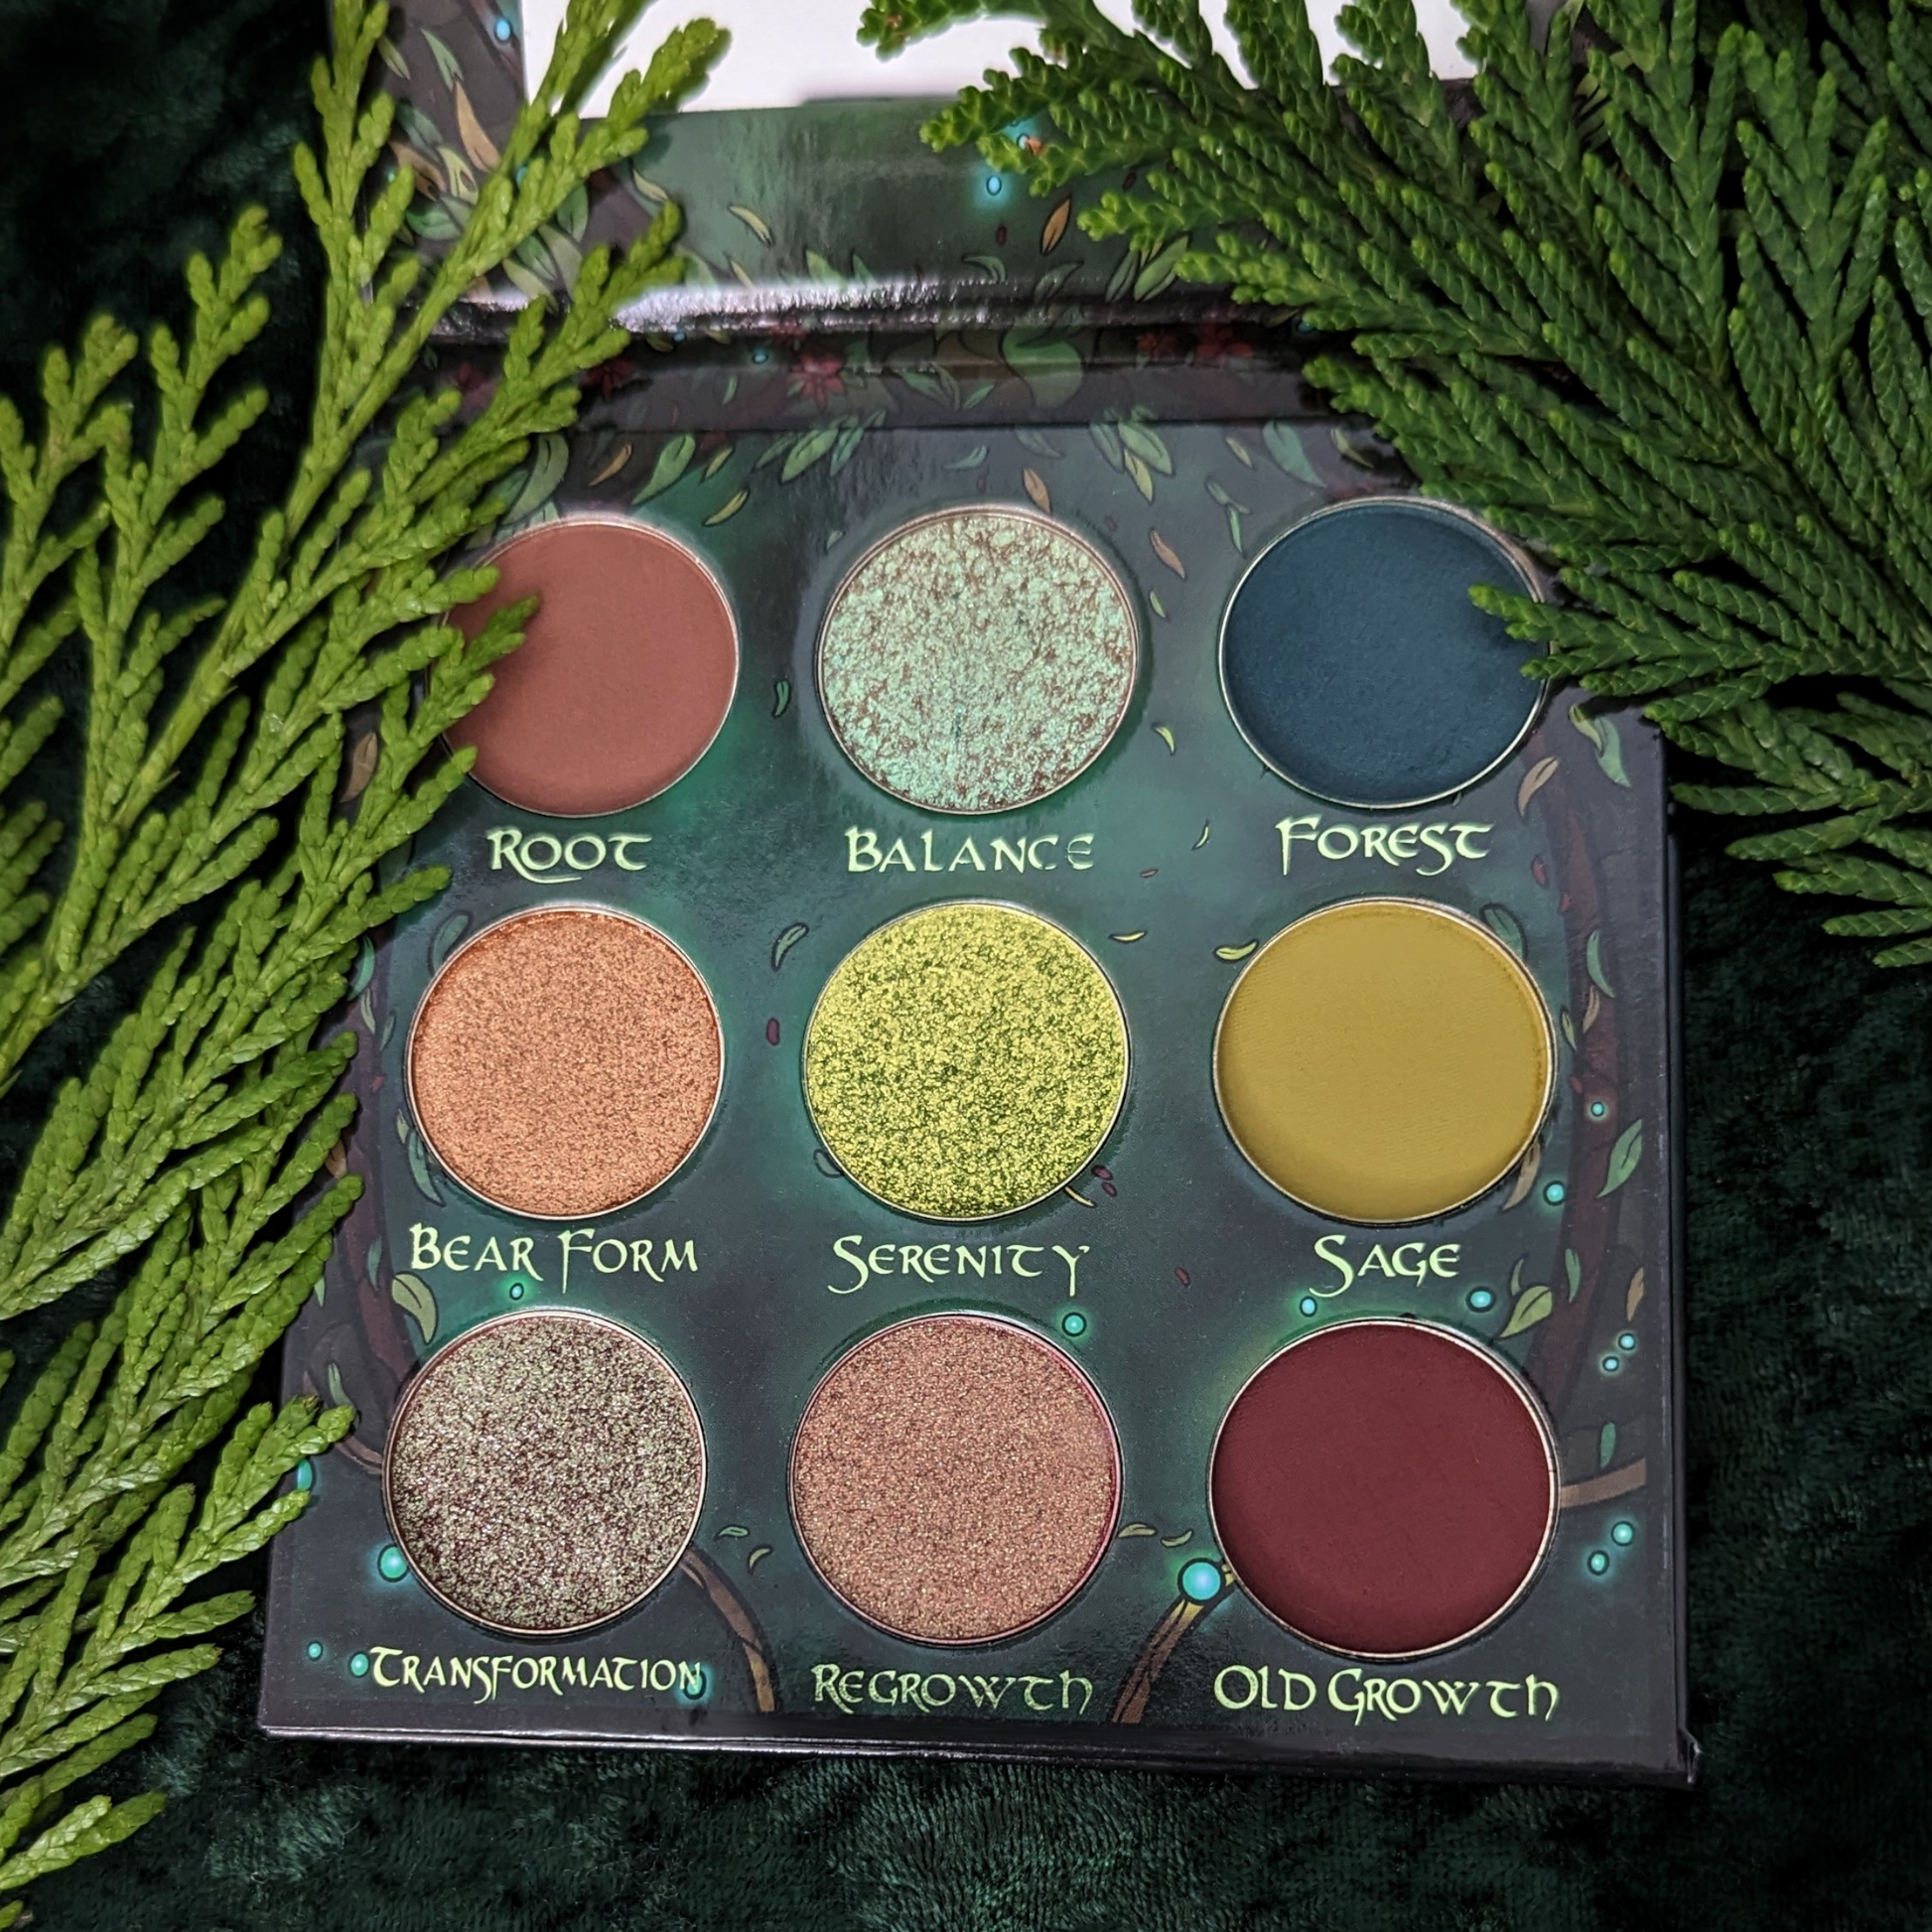 Druid eyeshadow palette opened by Fantasy Cosmetica